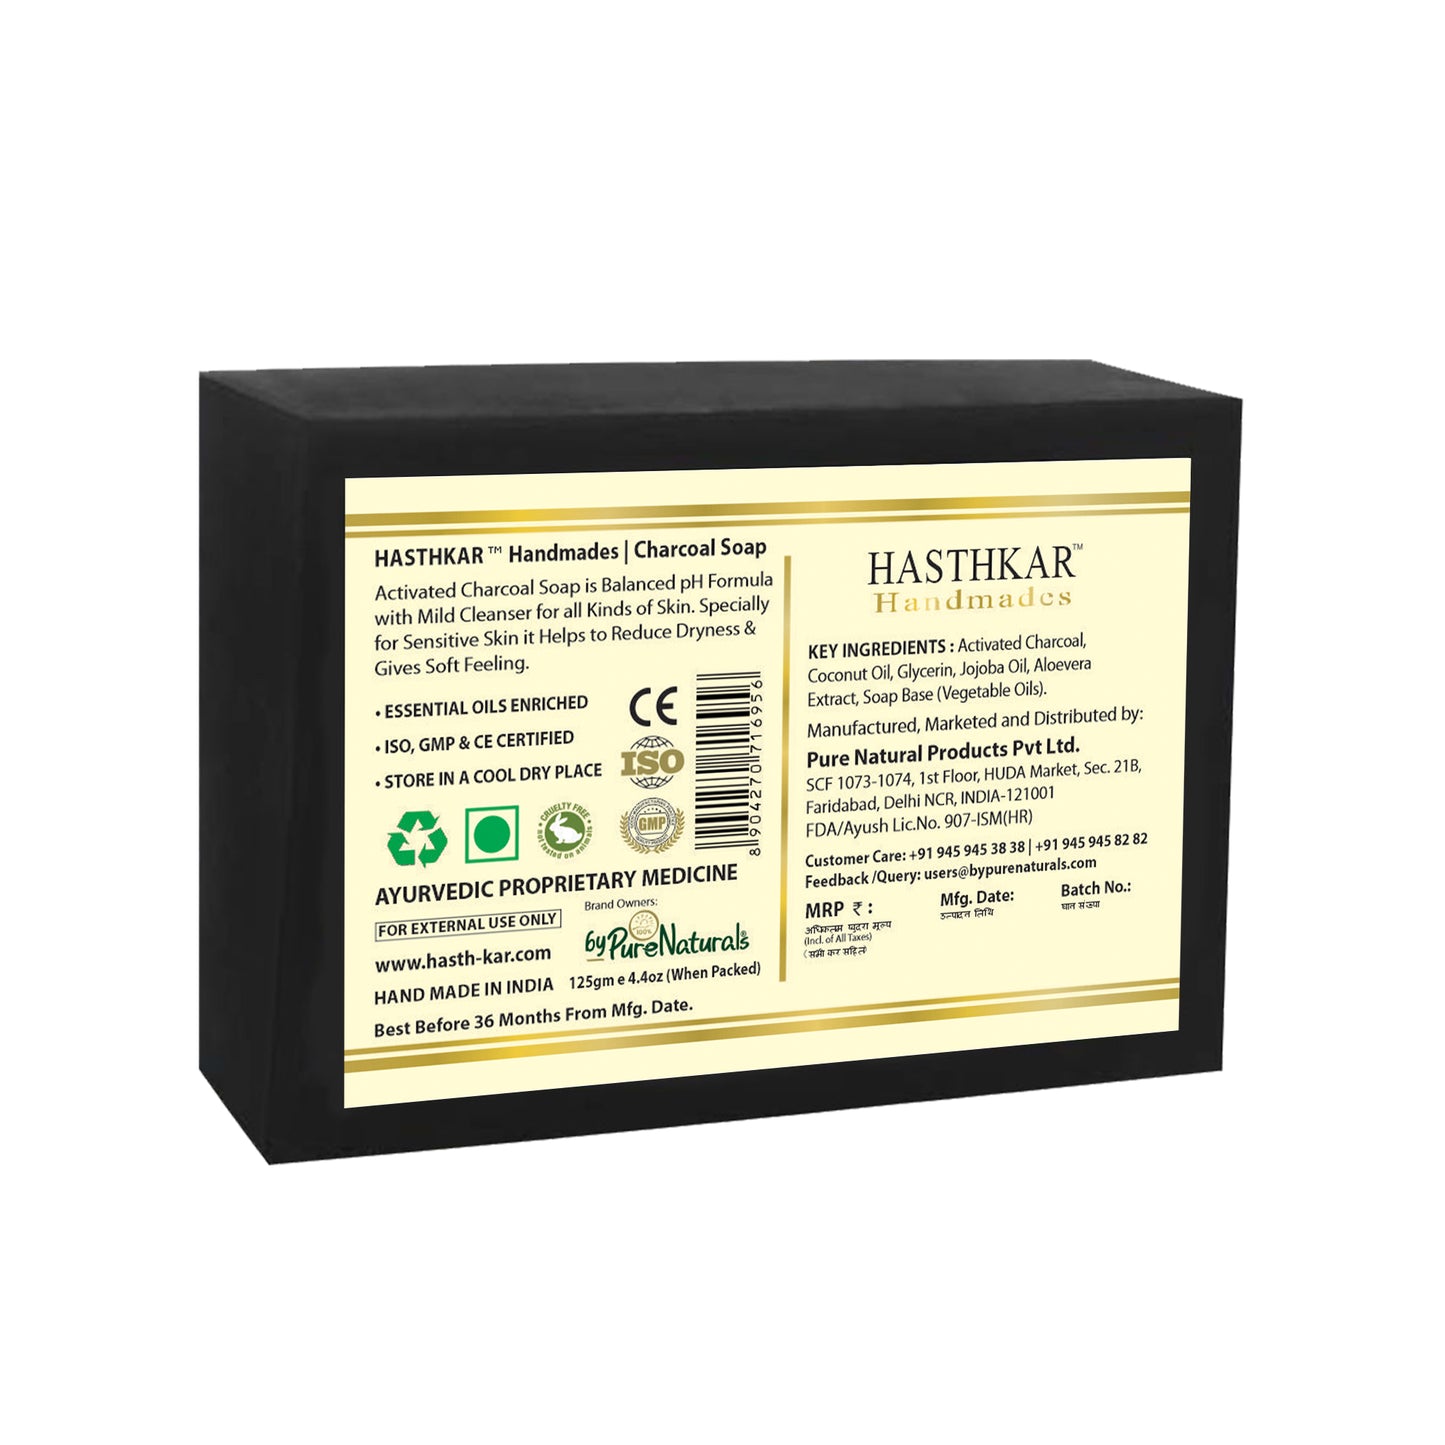 Hasthkar Handmades Glycerine Charcoal Soap 125gm Pack of 5